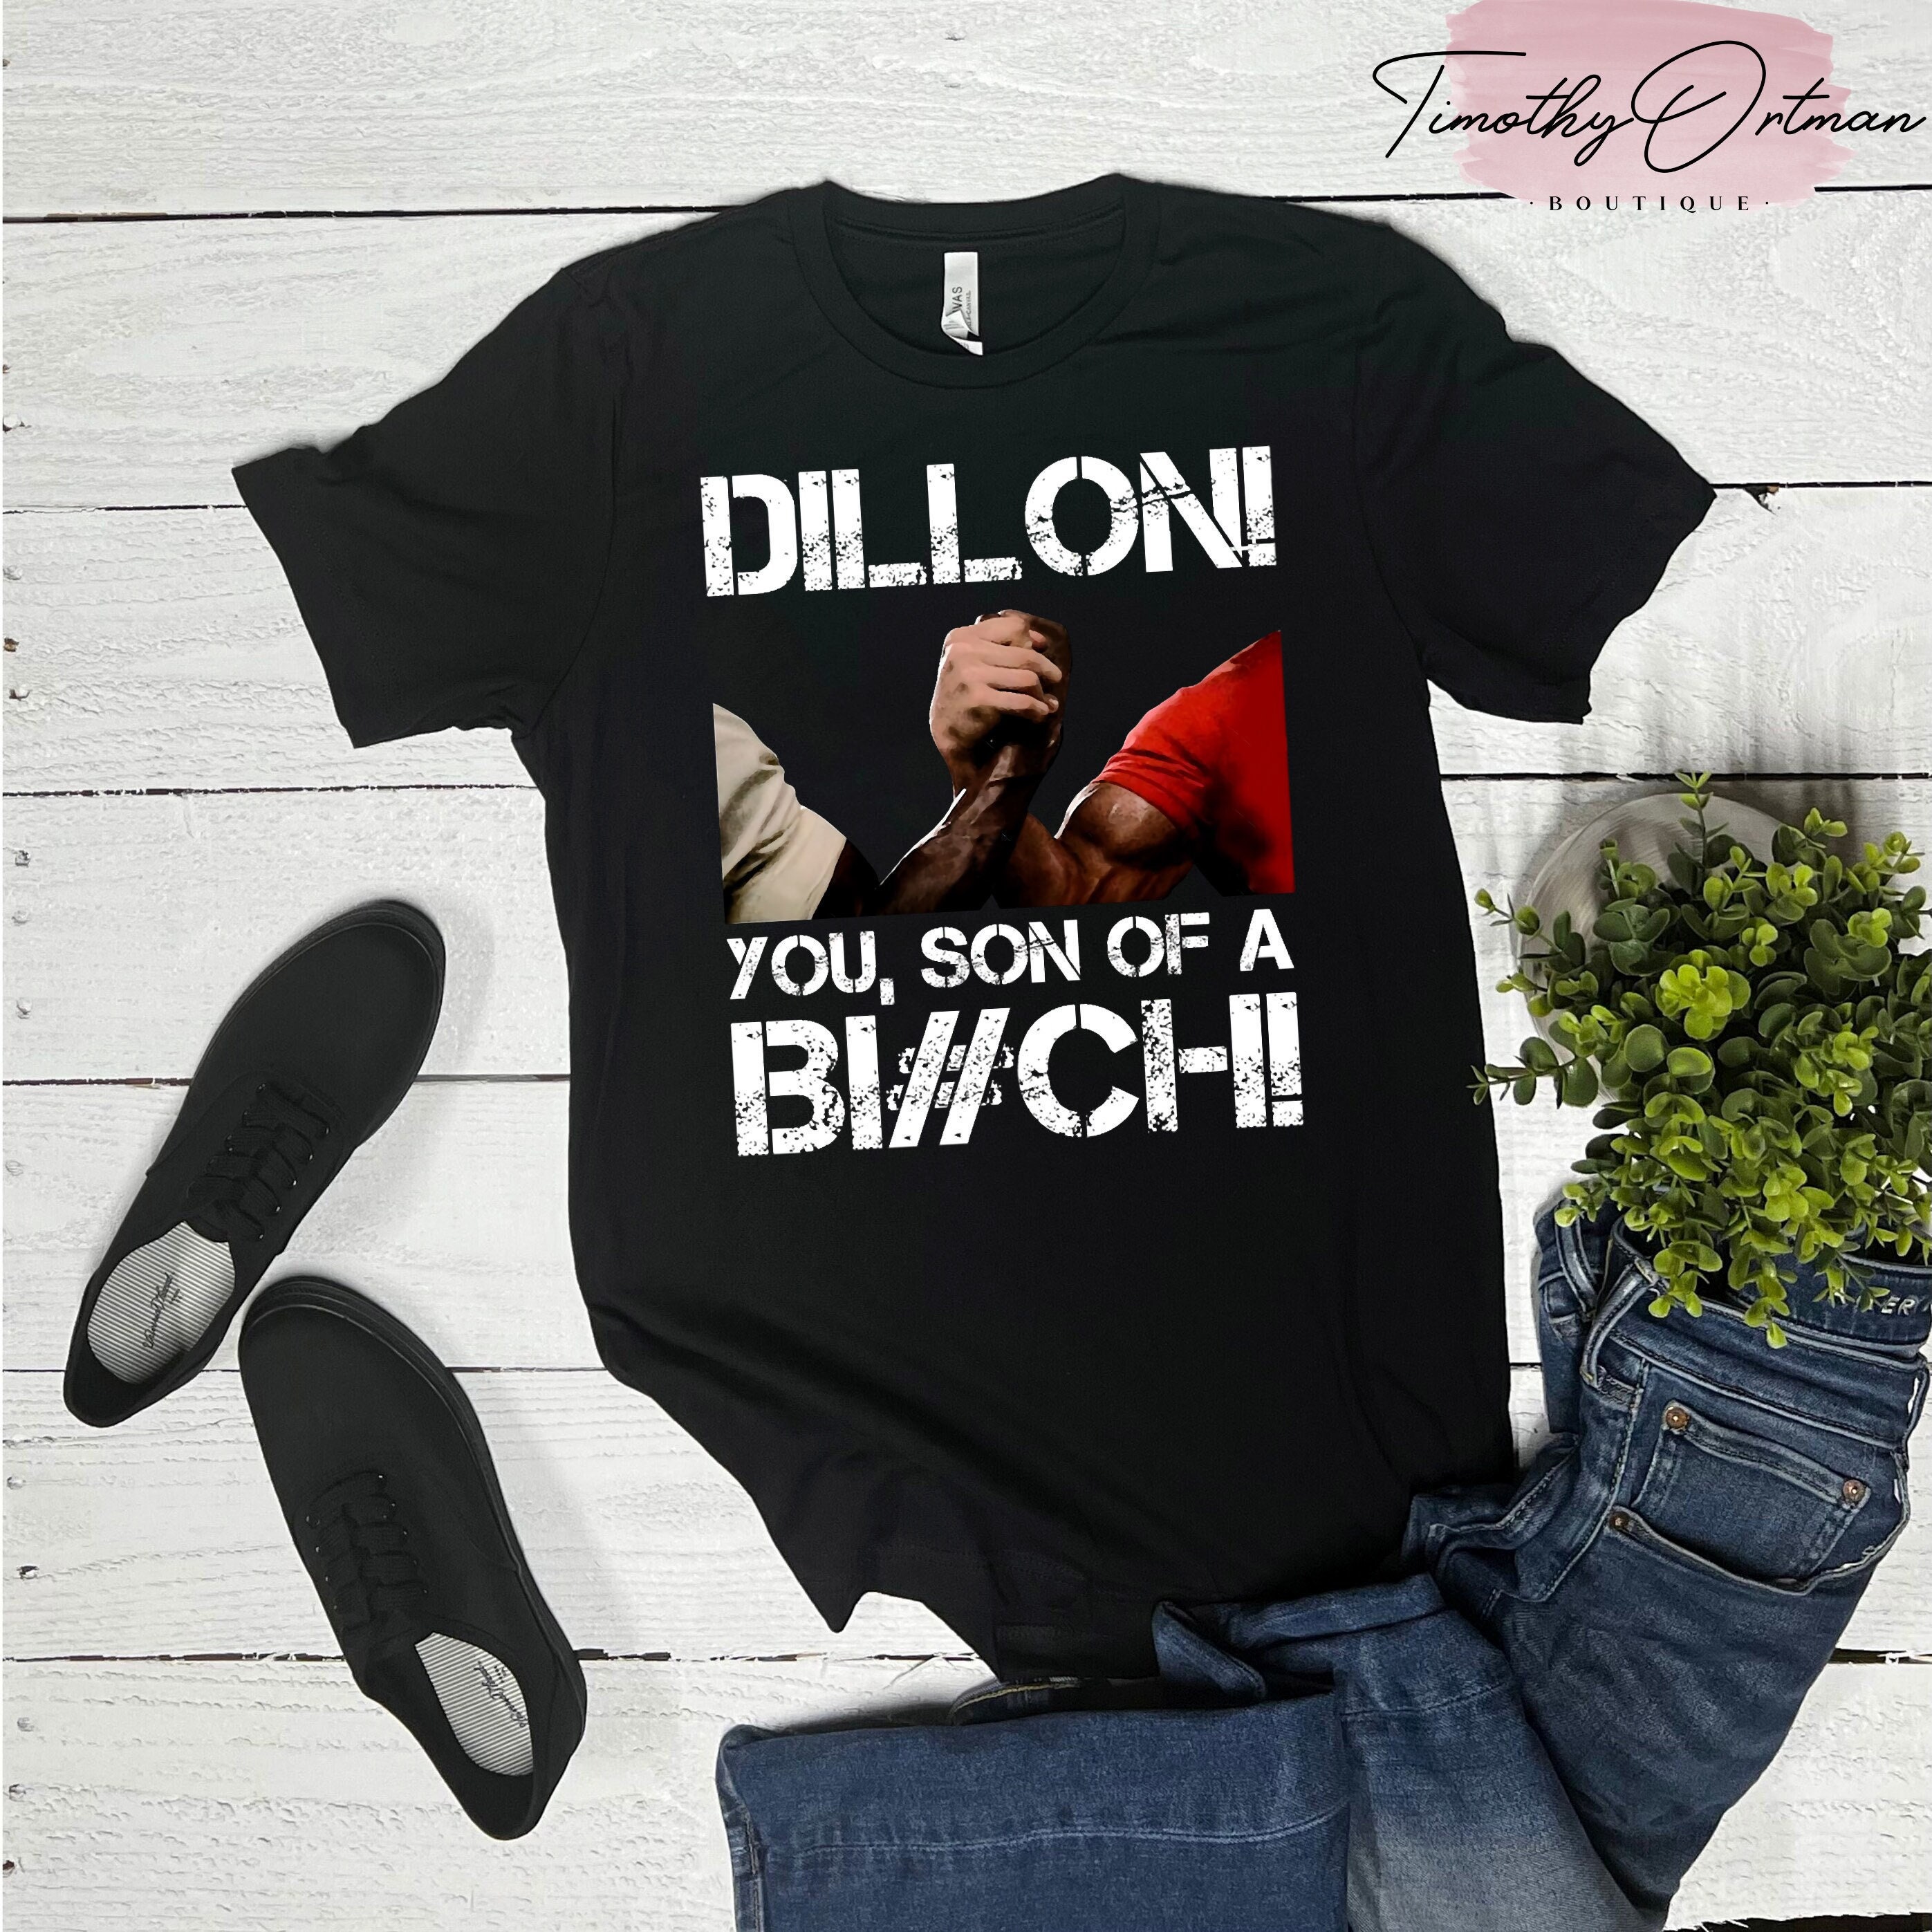 Dillon! you son of a Bi#ch! arnold schwarzenegger funny 80s dillon Classic  T-Shirt couple shirts Custom aldult Teen unisex - AliExpress